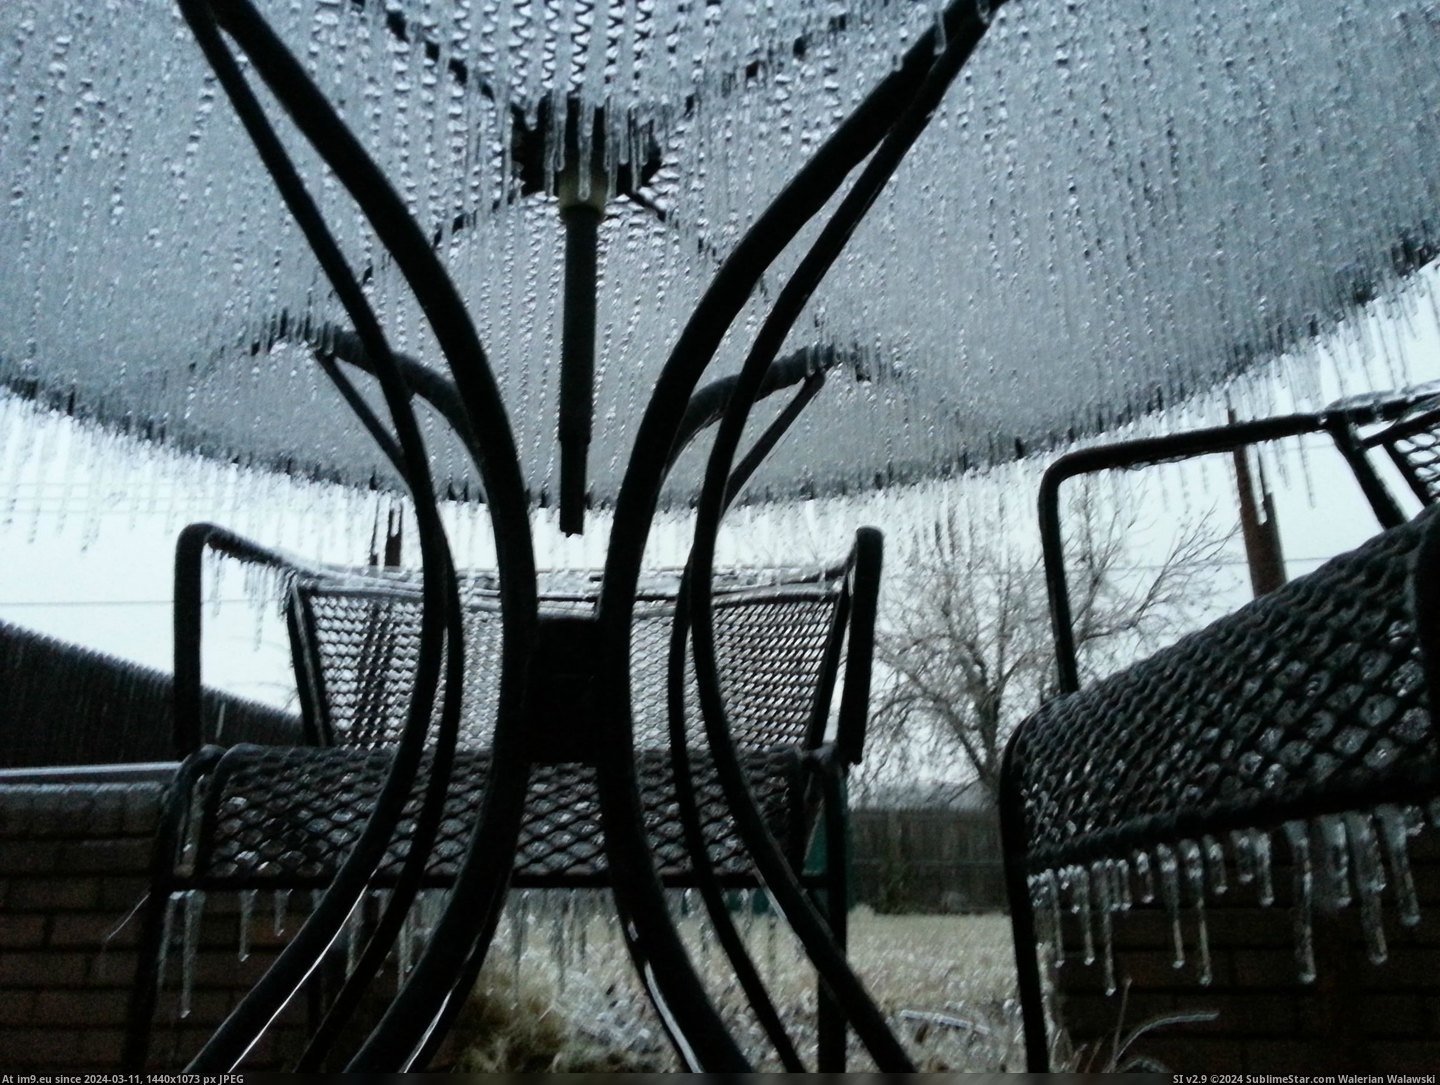 #Ice #Storm #Mesh #Furniture #Patio [Mildlyinteresting] This is what happens to mesh patio furniture in an ice storm 3 Pic. (Bild von album My r/MILDLYINTERESTING favs))